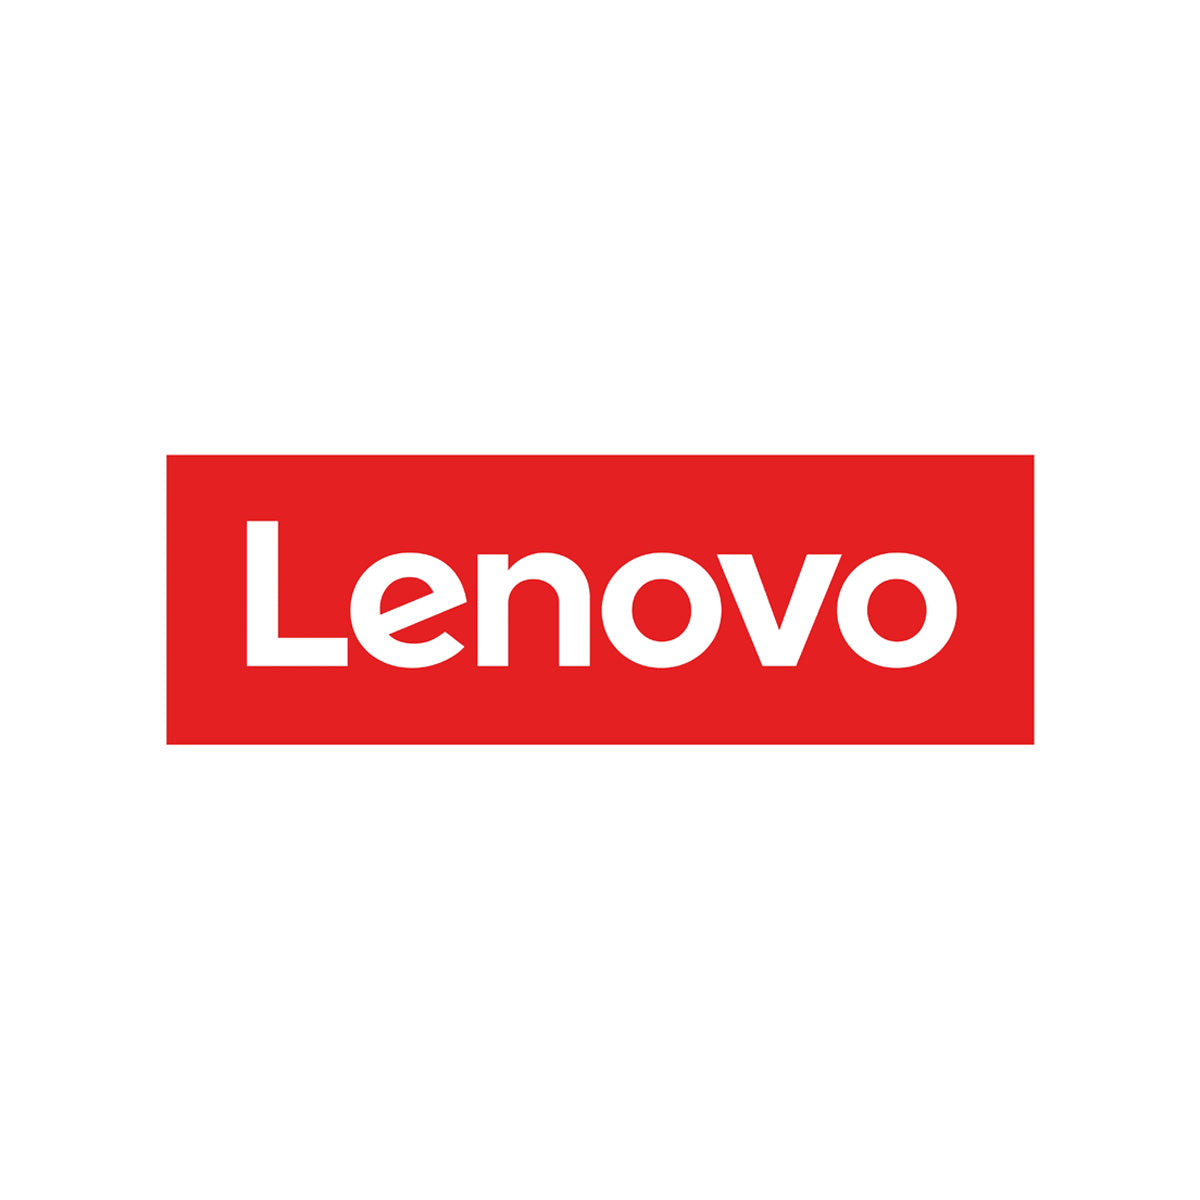 Lenovo Refurbished Desktop Computers